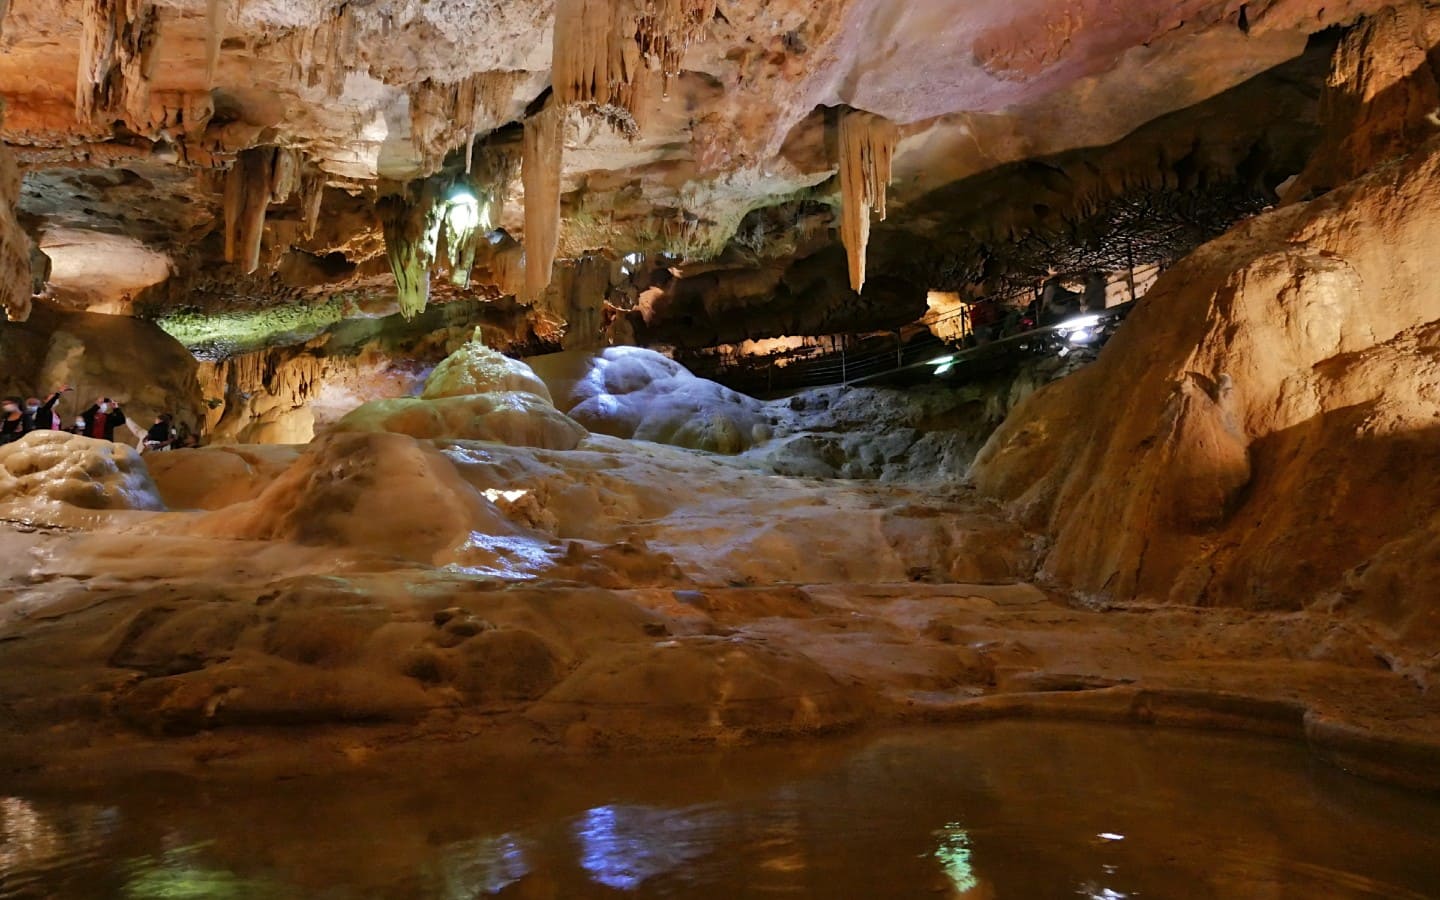 Les Grottes de Bétharram